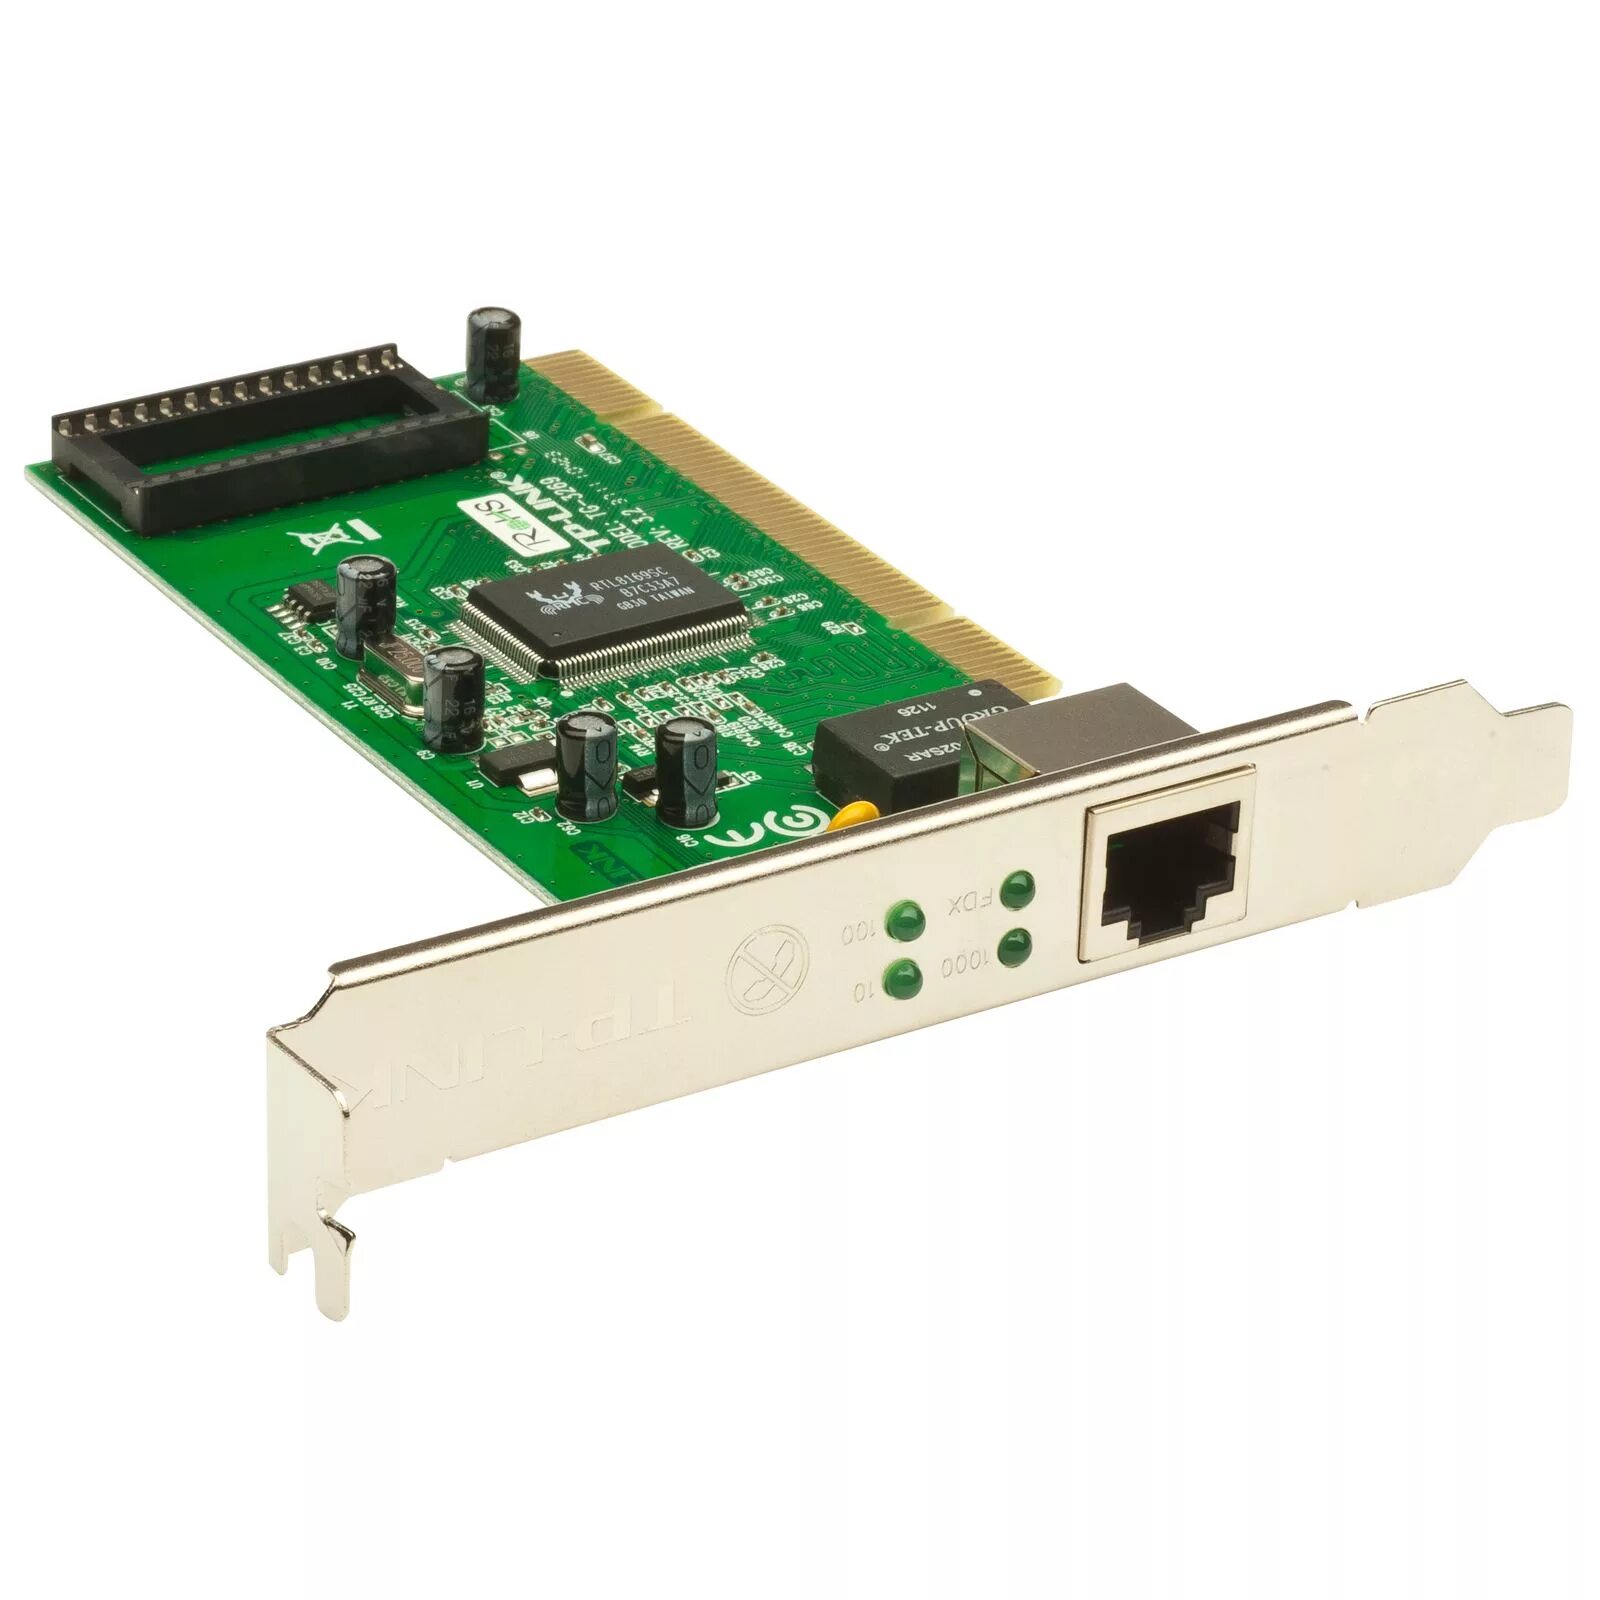 Сетевая карта для 7. Сетевой адаптер Gigabit Ethernet d-link DGE-528t RJ-45. Gigabit PCI Network Adapter TG-3269. Сетевая карта TP-link TG-3269. Сетевая карта TP-link TG-3269 10/100/1000 Mbps PCI.